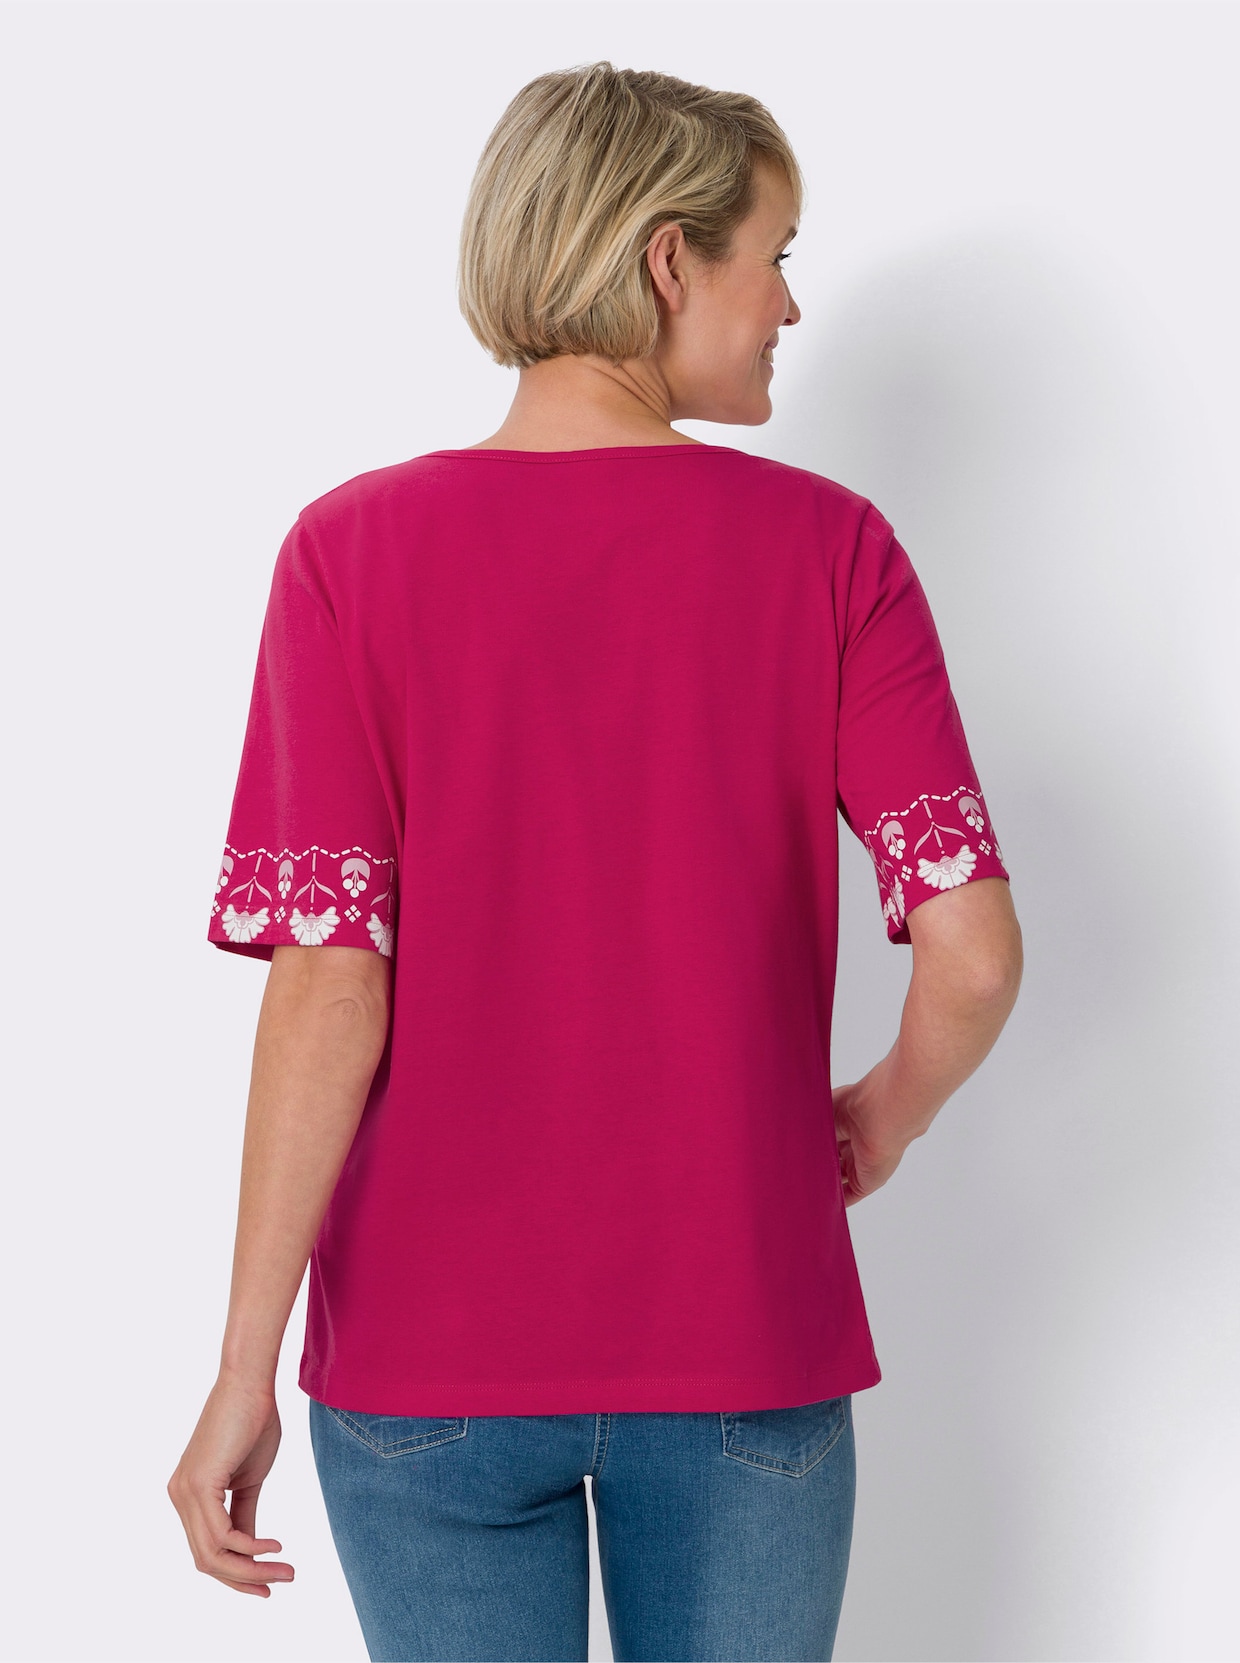 Tričko s krátkým rukávem - pink-bílá